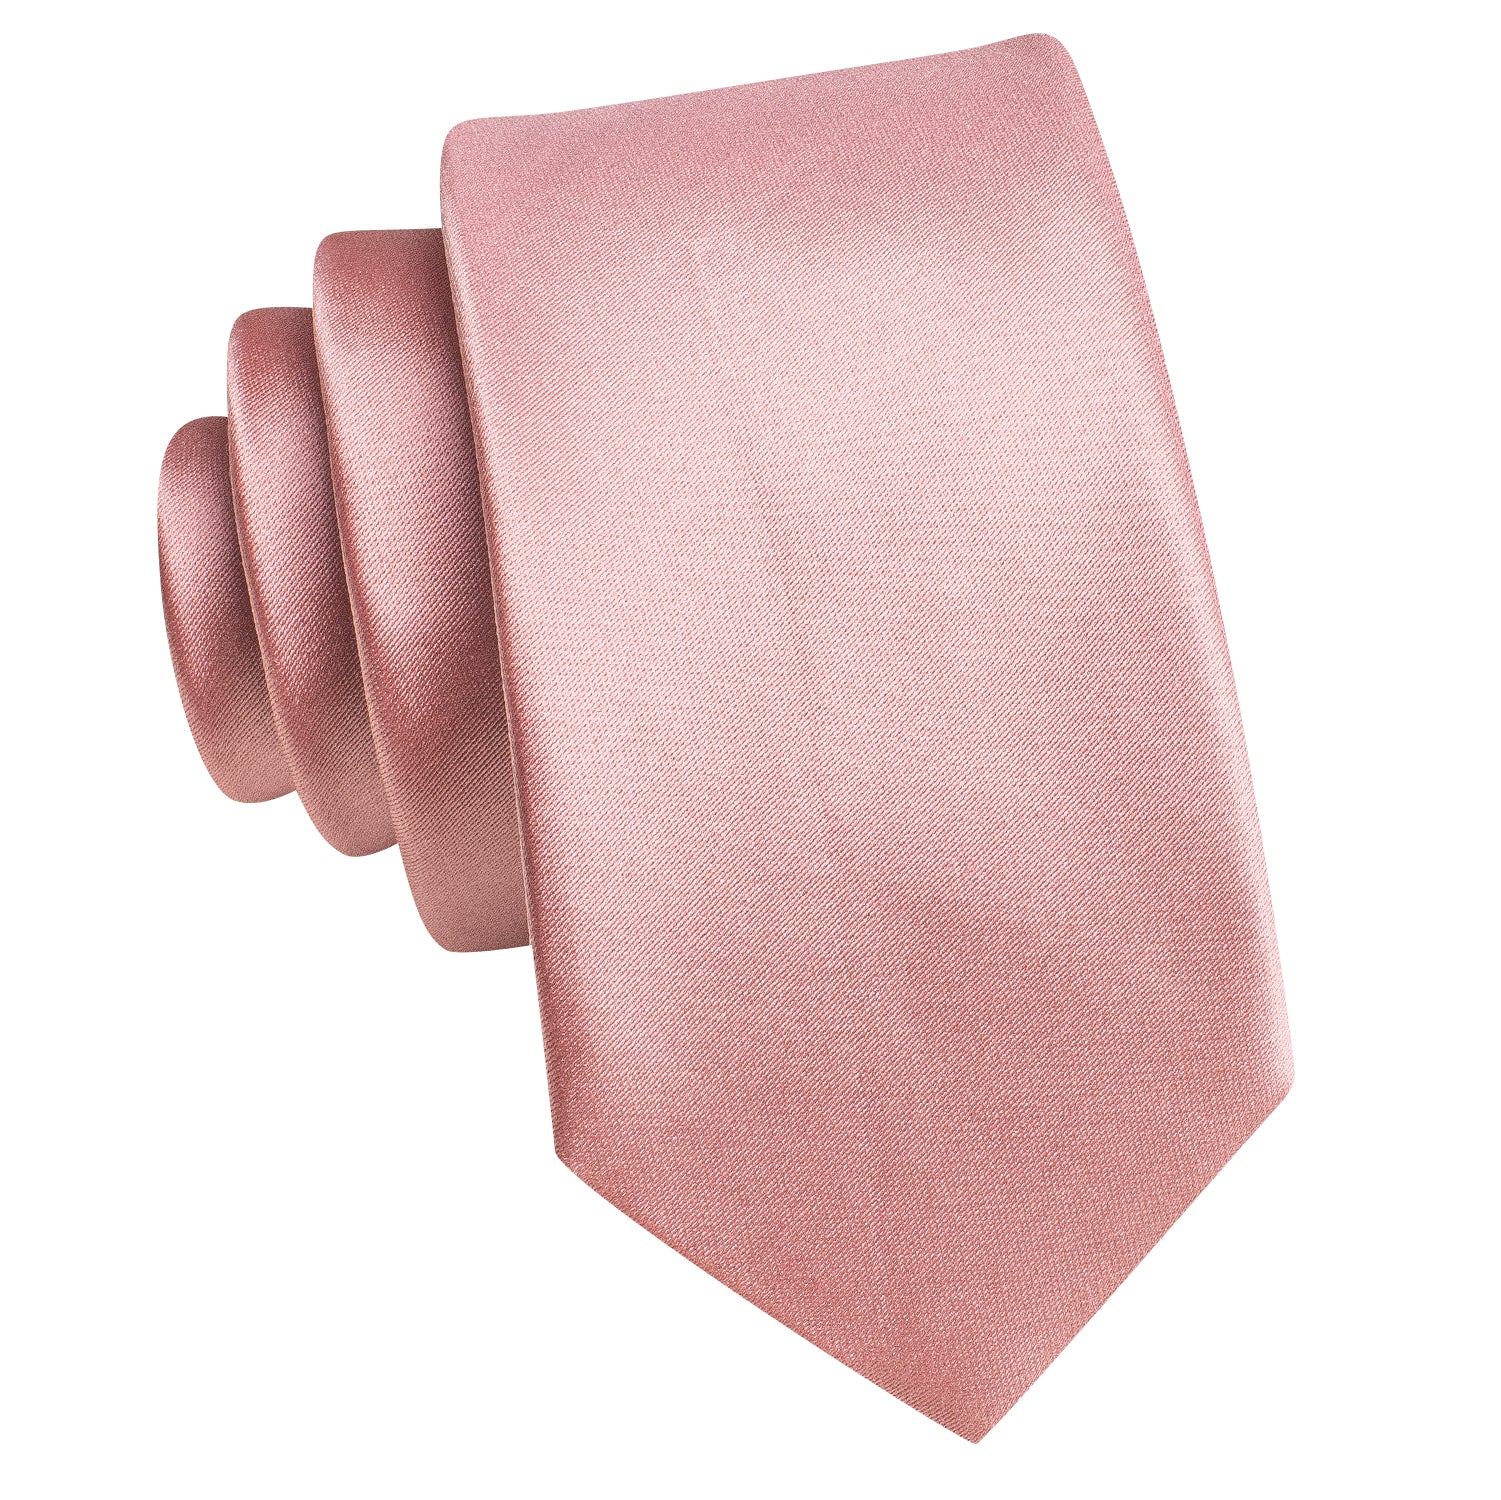 Coral Pink Solid Children's Kids Boys Tie Pocket Square 6cm